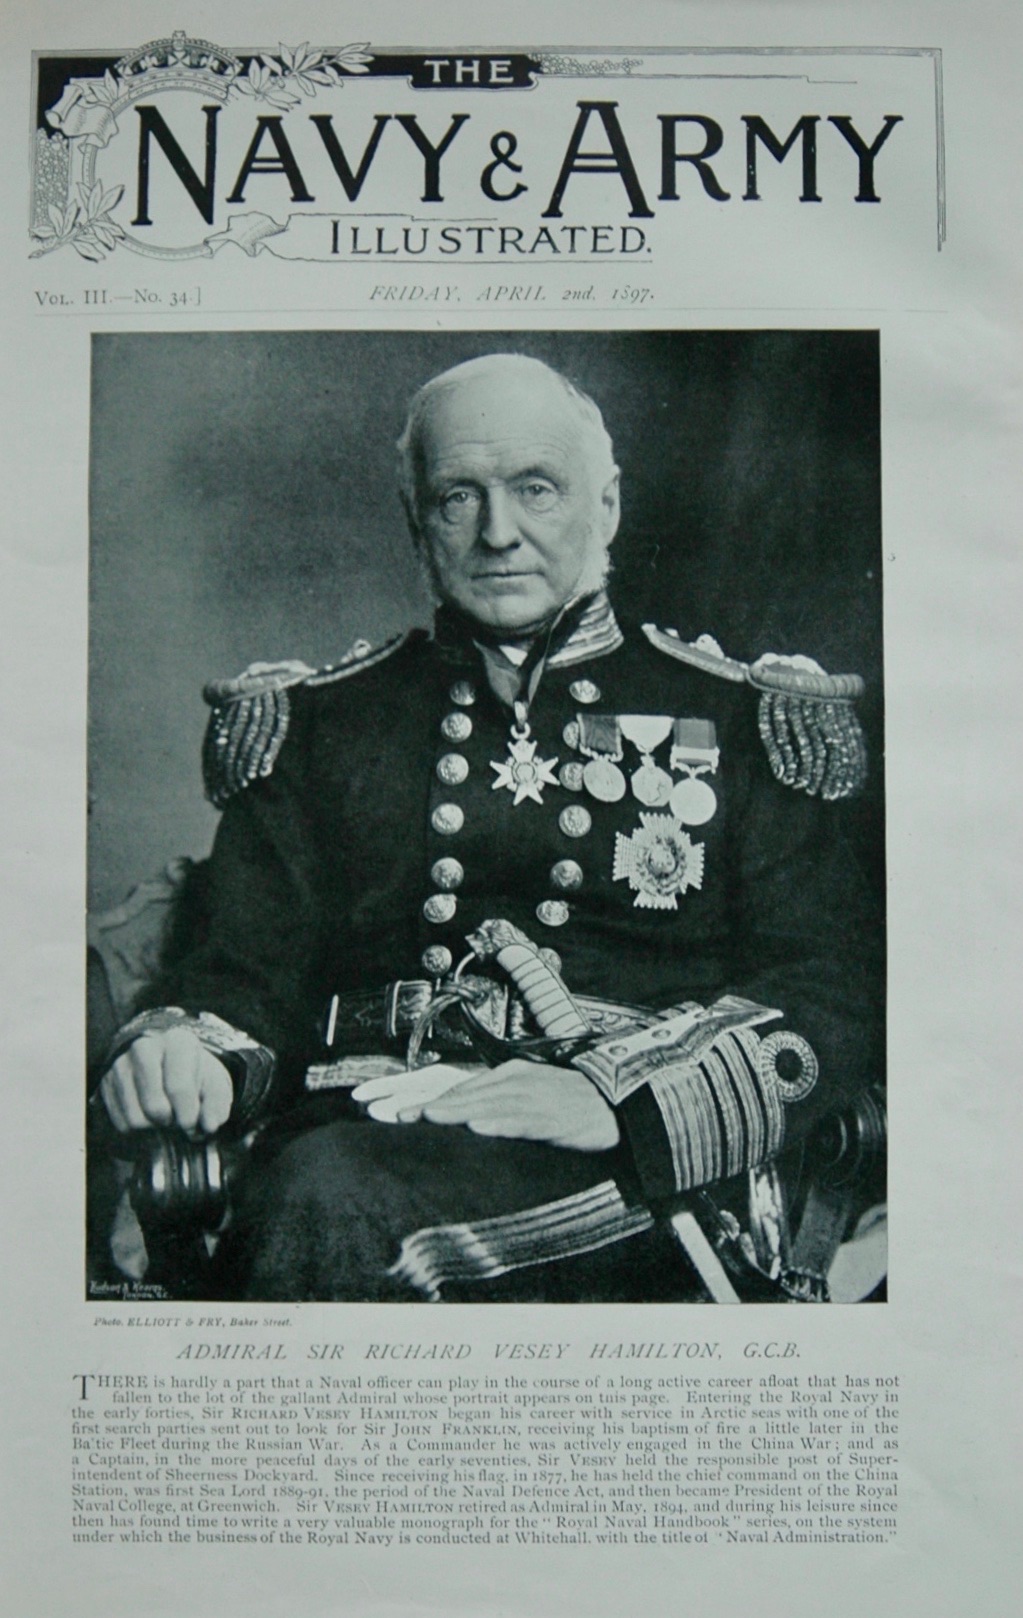 Admiral Sir Richard Vesey Hamilton - 1897